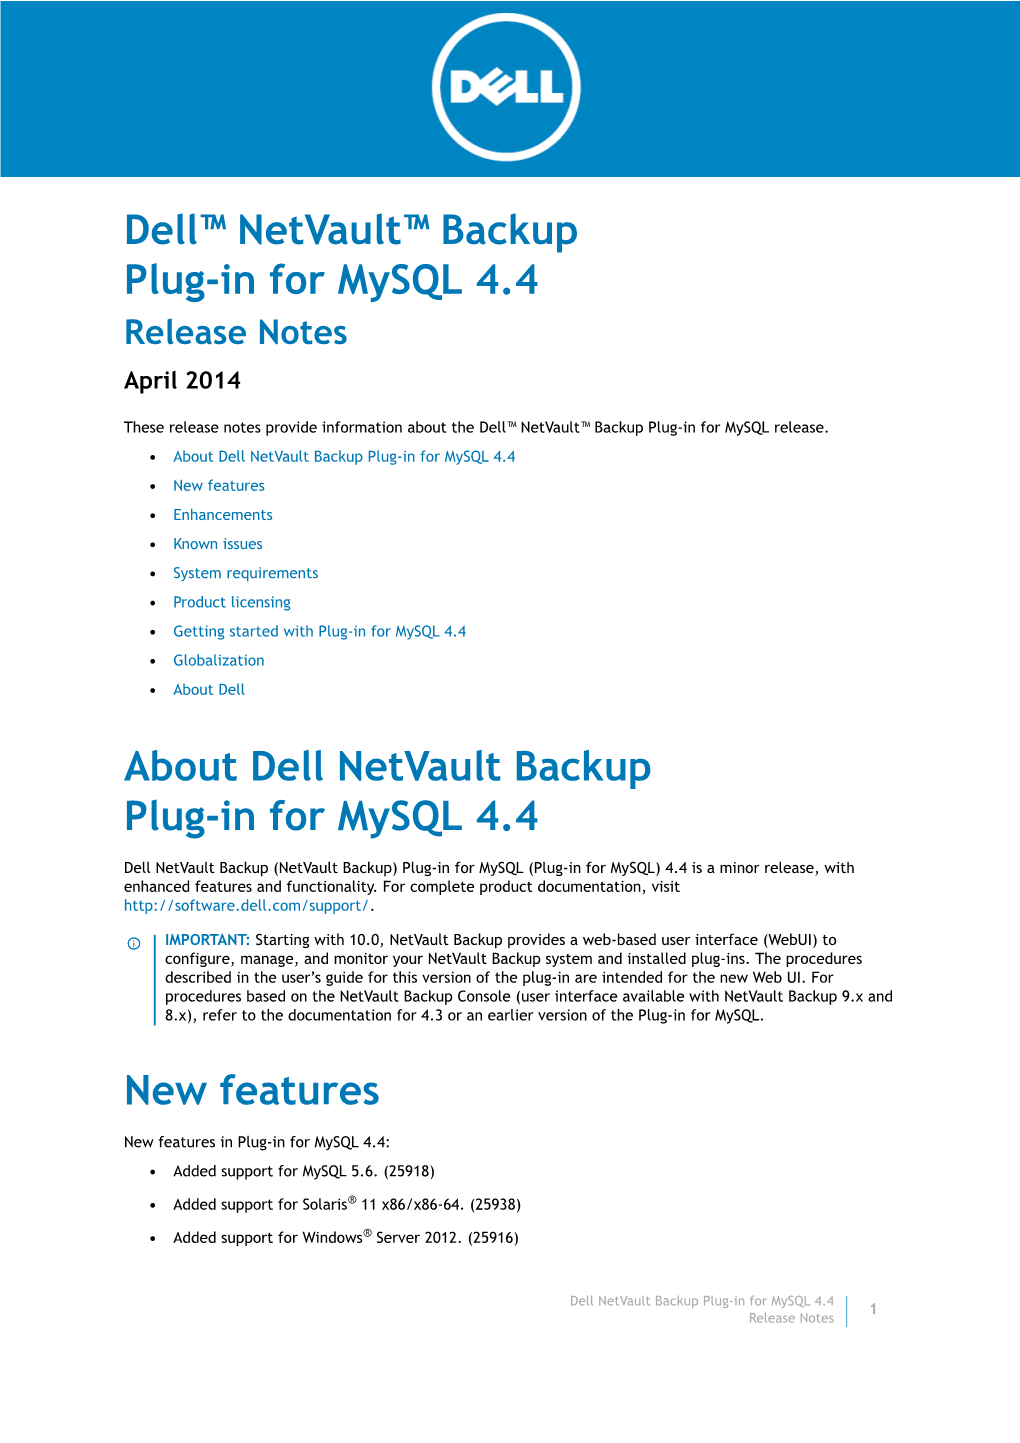 Dell™ Netvault™ Backup Plug-In for Mysql 4.4 Release Notes April 2014